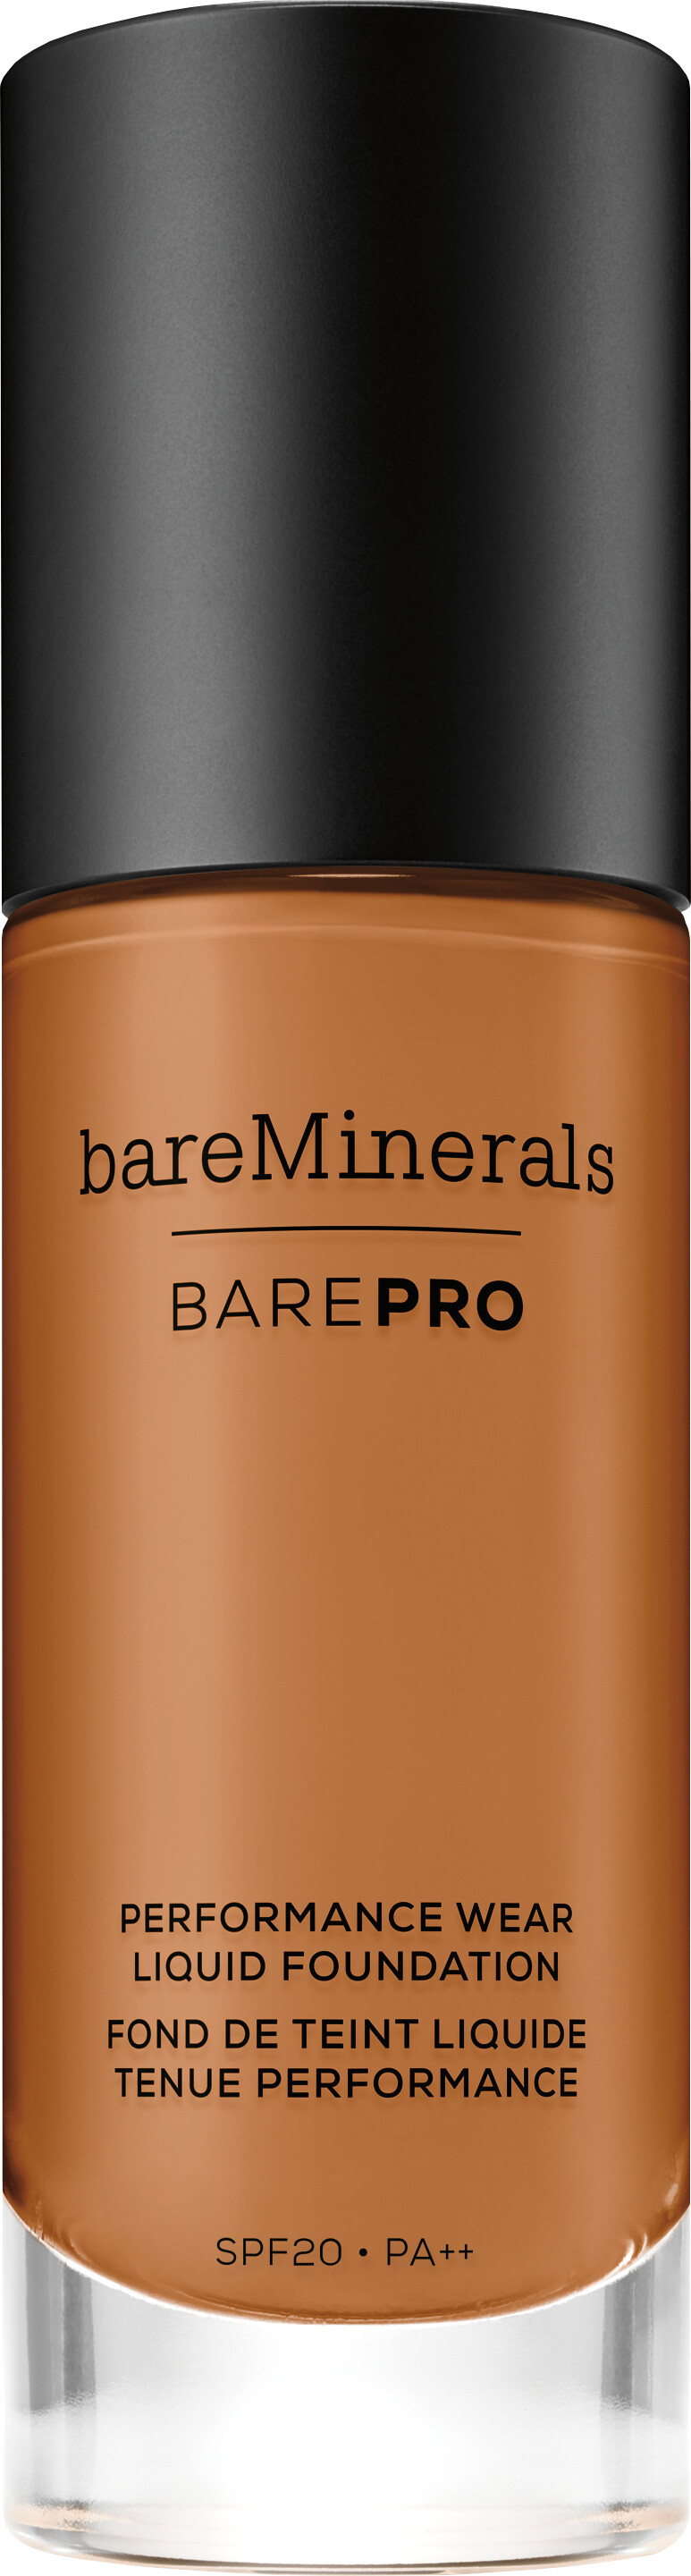 bareMinerals BAREPRO Performance Wear Liquid Foundation SPF20 30ml 24 - Latte